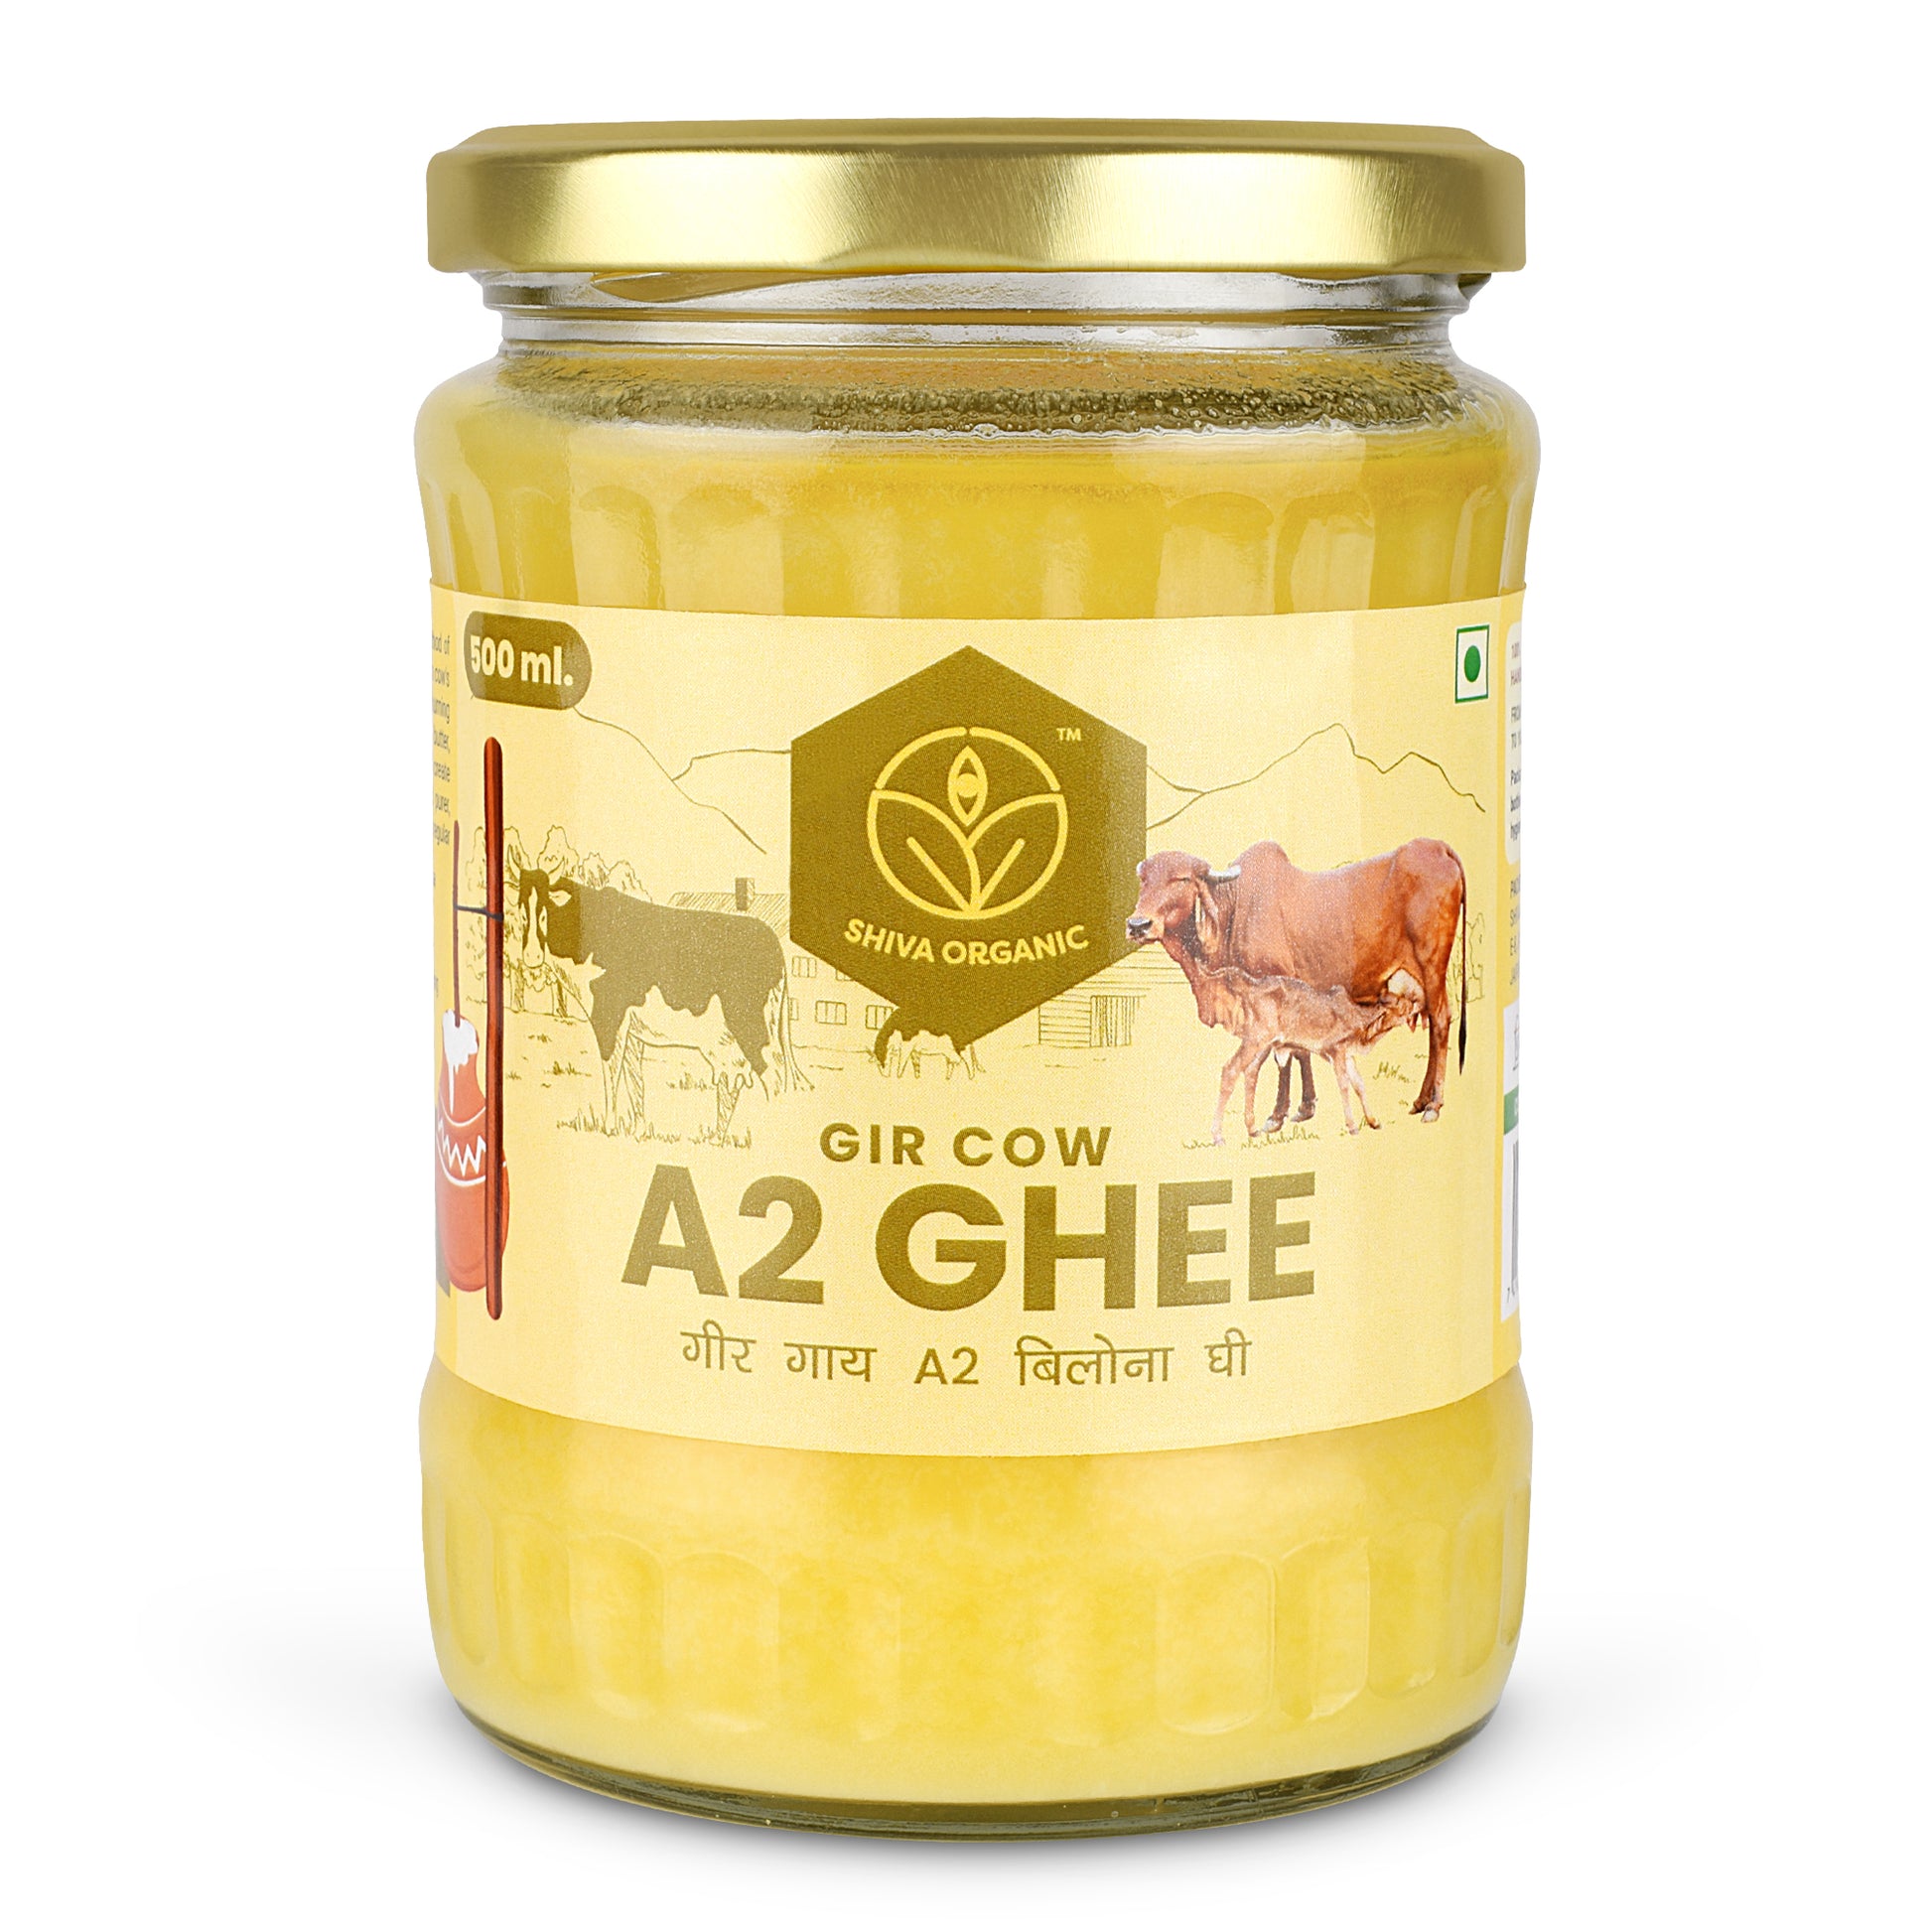 Gir Cow A2 Bilona Ghee | buy pure Desi Ghee Cow Ghee | Shiva Organic